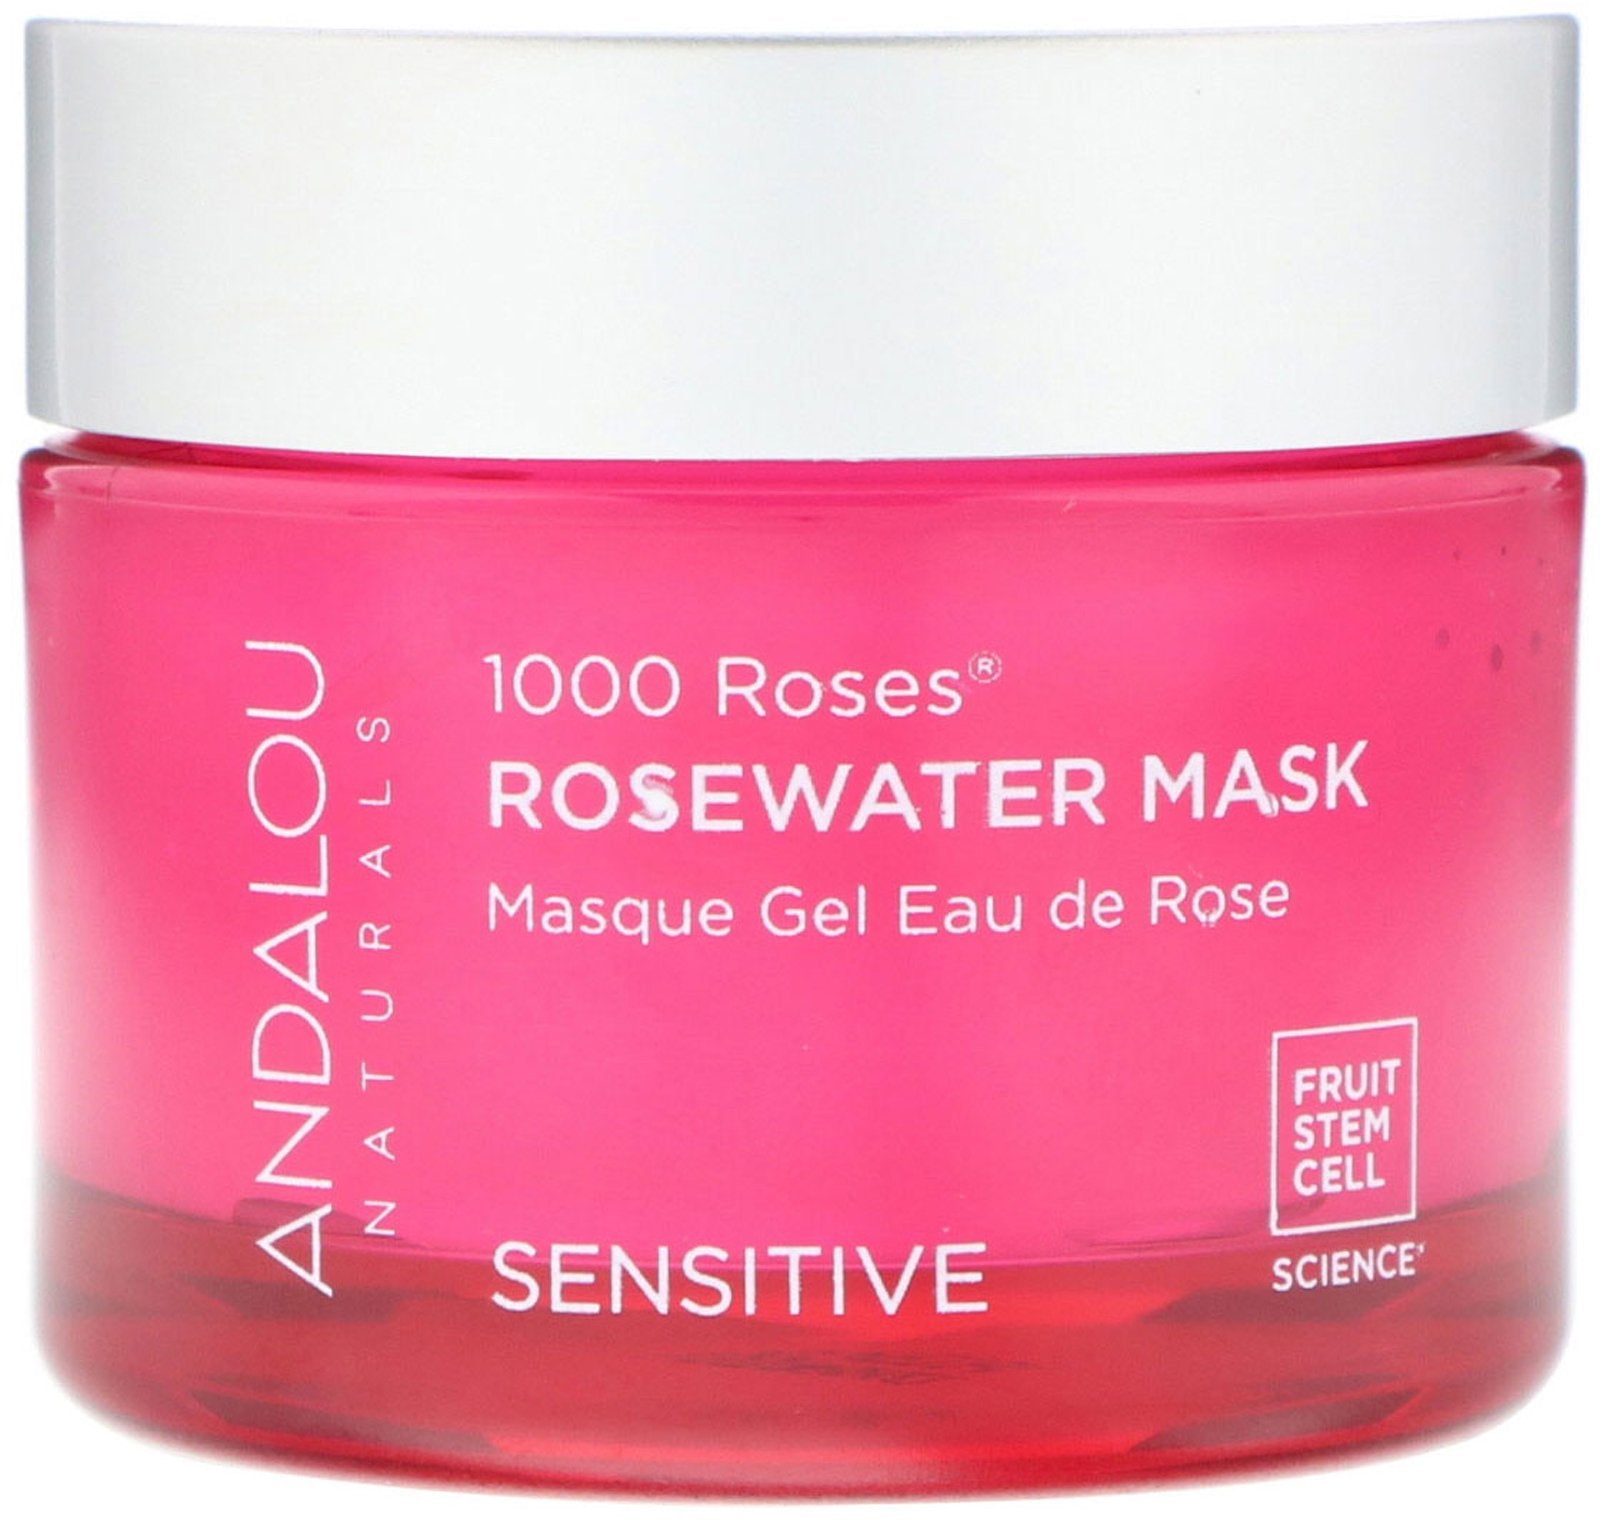 Andalou Naturals, 1000 Roses, Rosewater Beauty Mask, Sensitive, 1.7 oz (50 g)